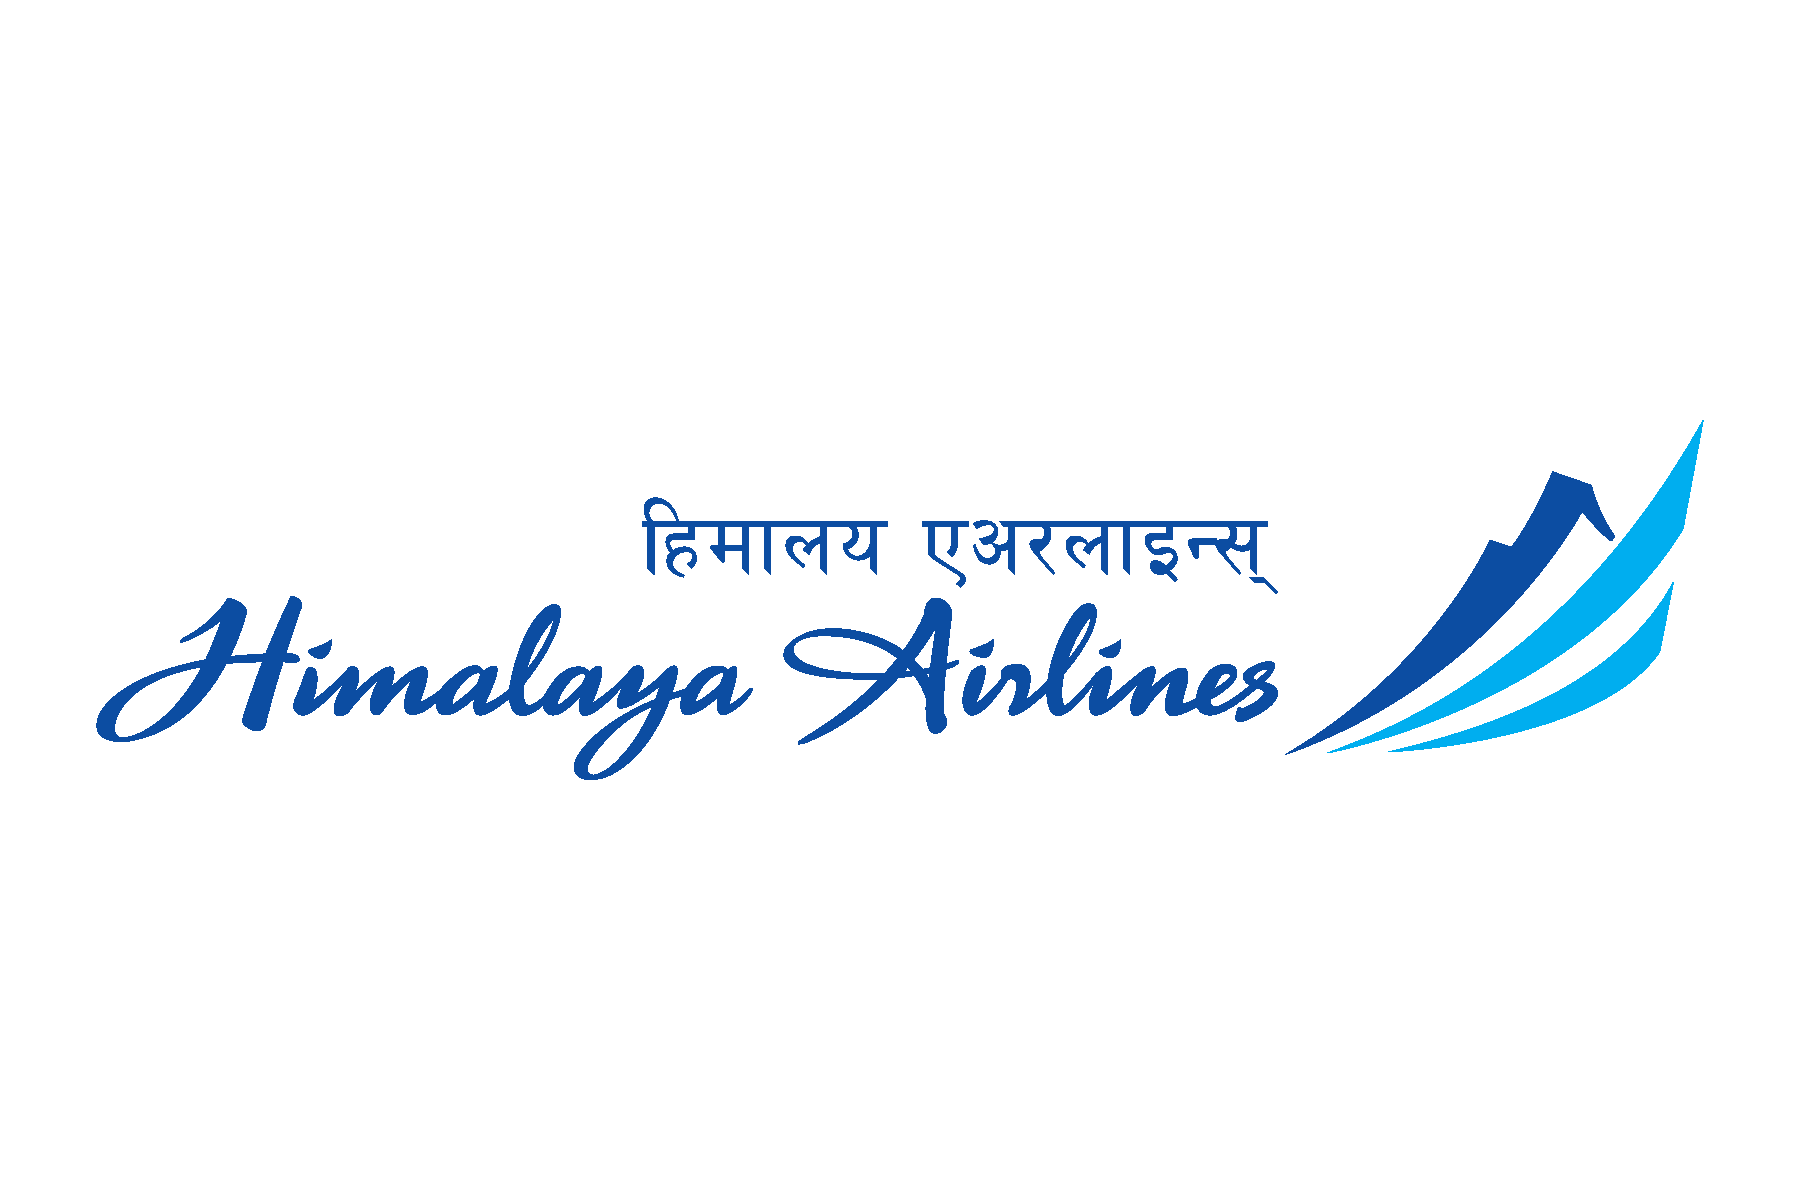 हिमालय एयरलाइन्सको दोहा उडान संख्या थपियो